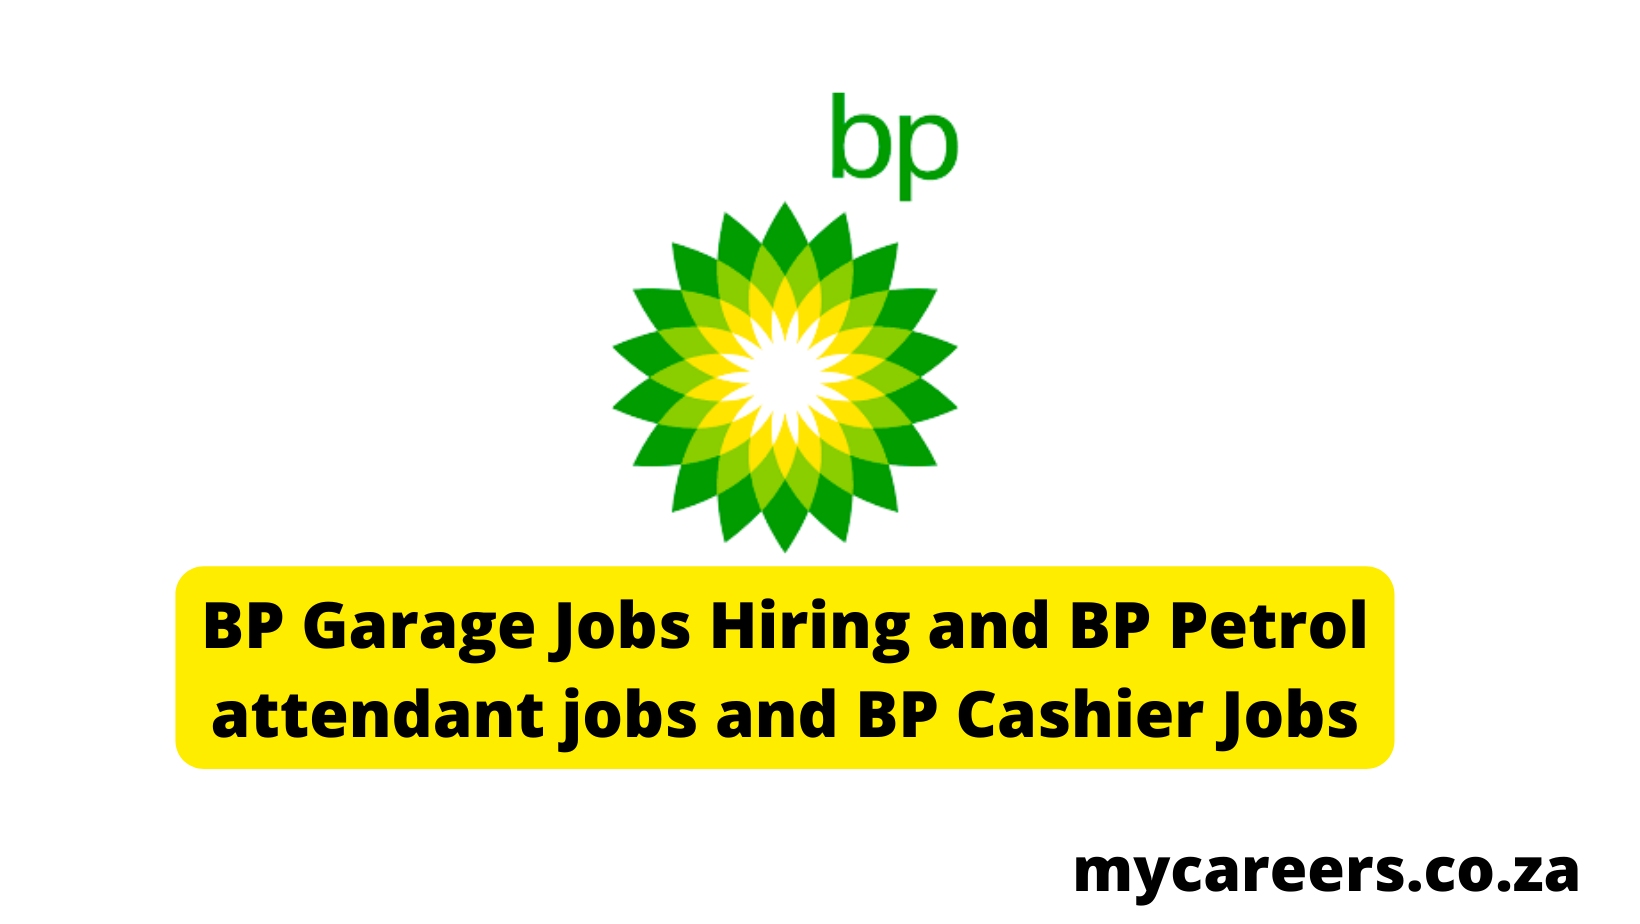 BP Garage Jobs Hiring and BP Petrol attendant jobs and BP Cashier Jobs